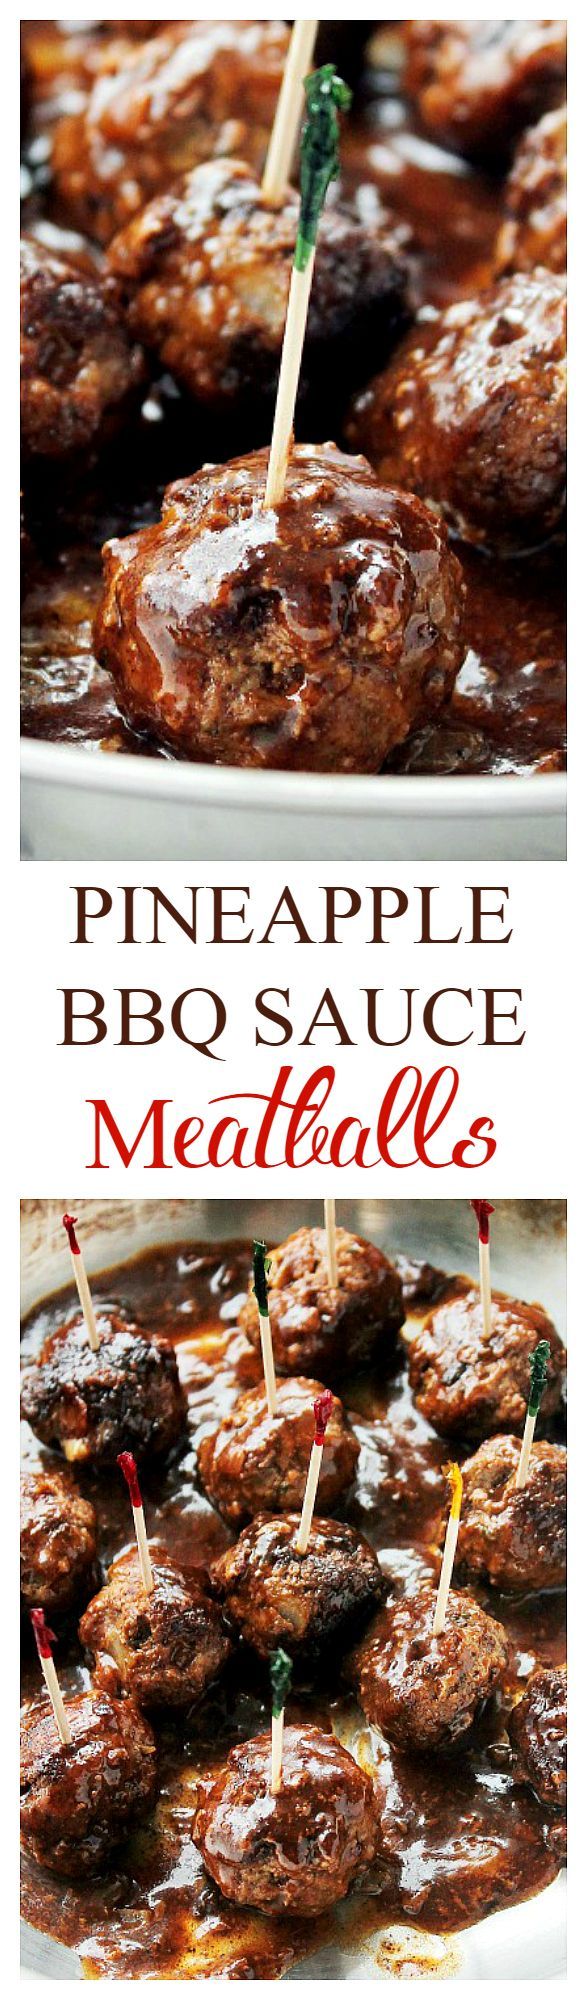 Pineapple Barbecue Sauce Glazed Meatballs